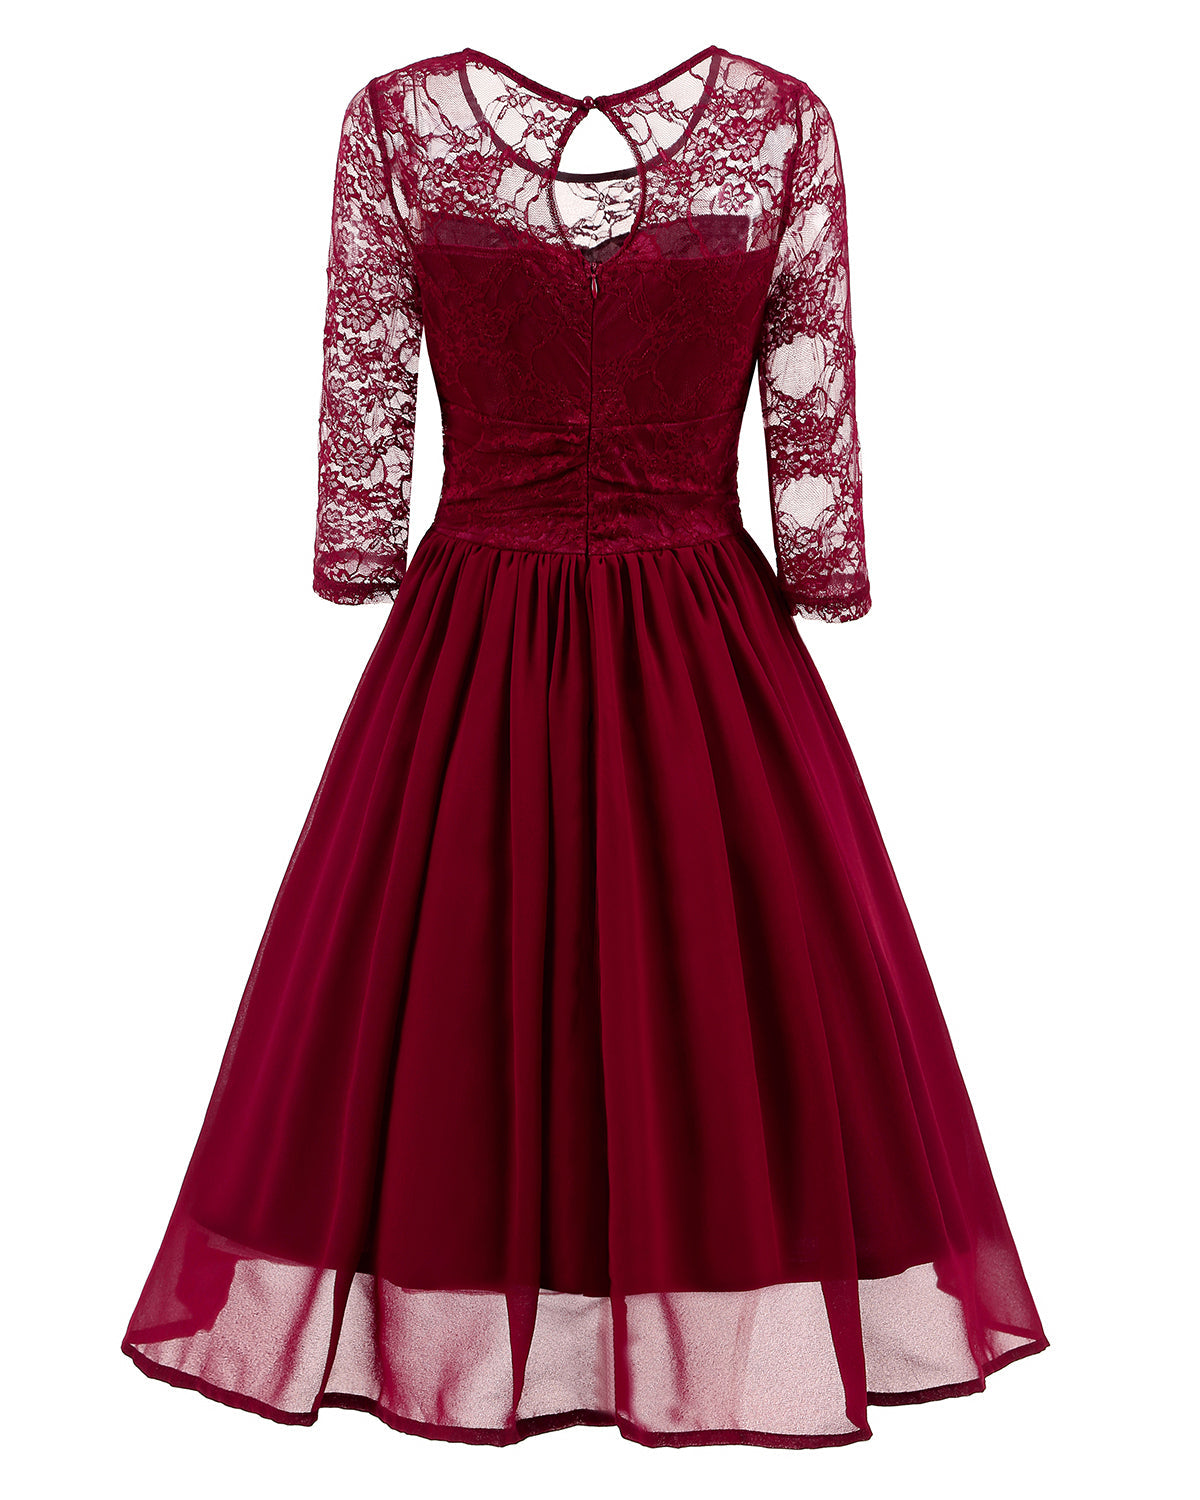 Classy Short Prom Dress with Sleeves,Vintage Prom Dress, Maroon Prom Dress,1581B